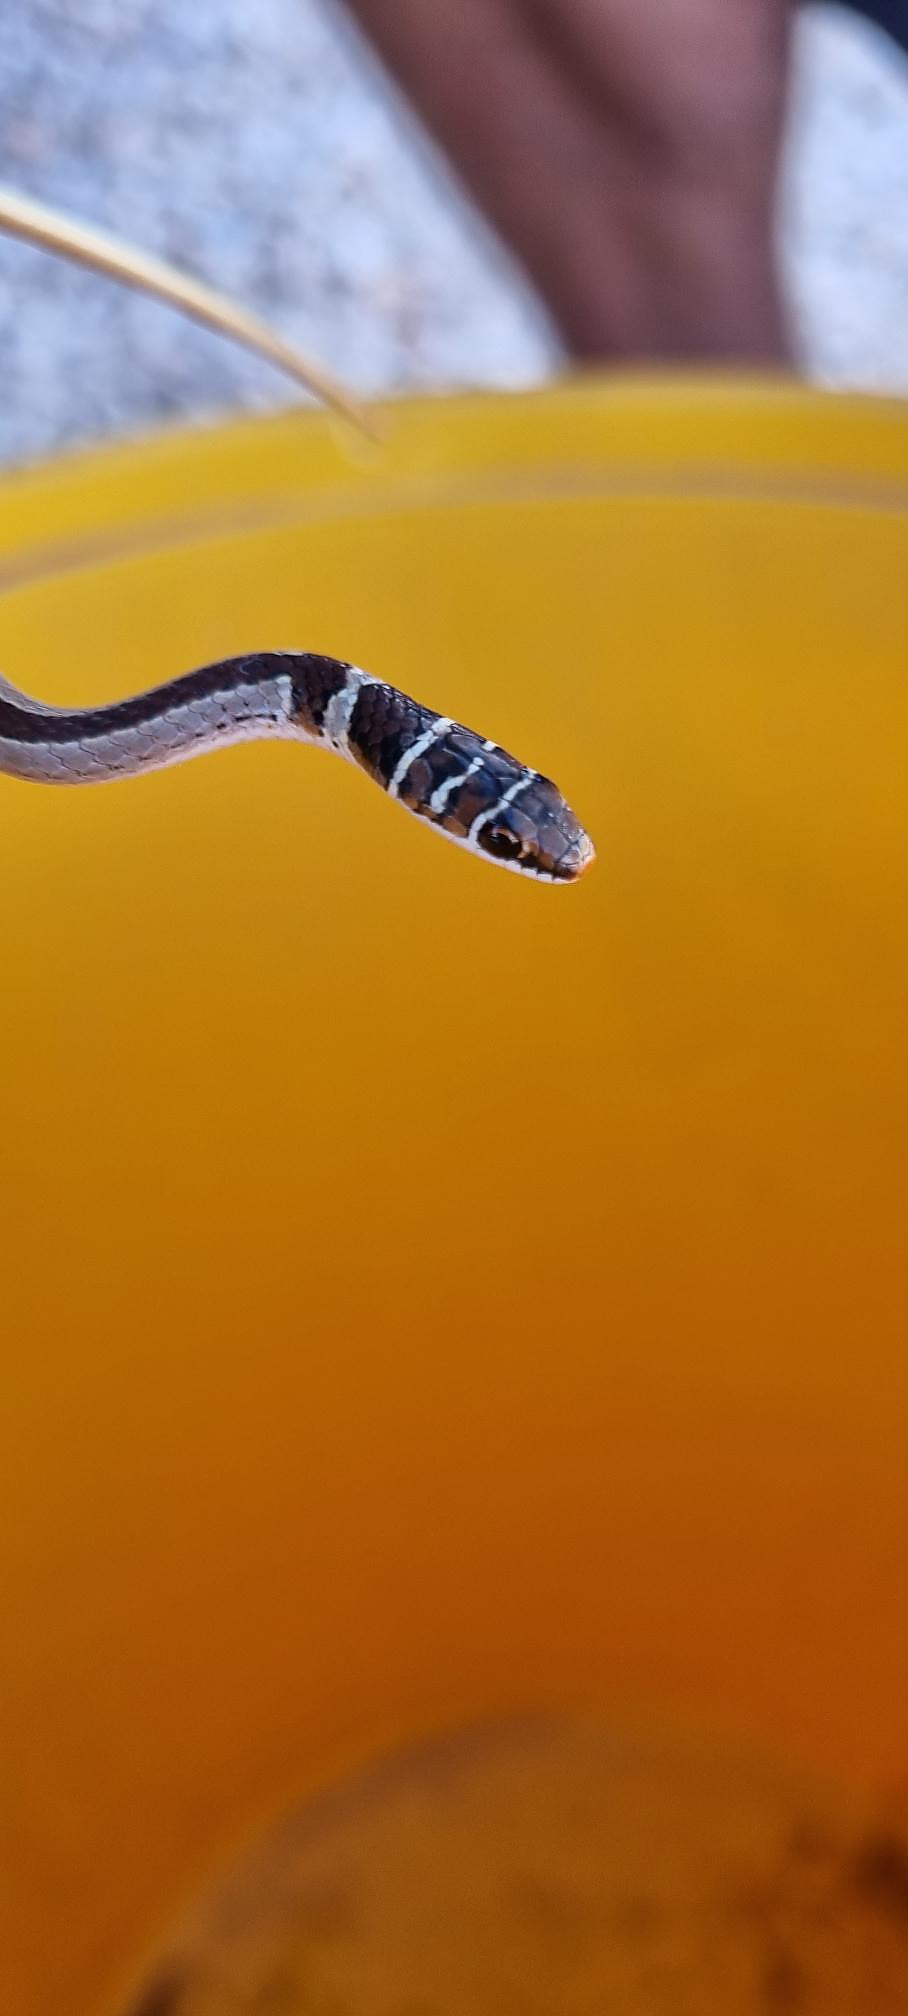 Dwarf Sand Snake